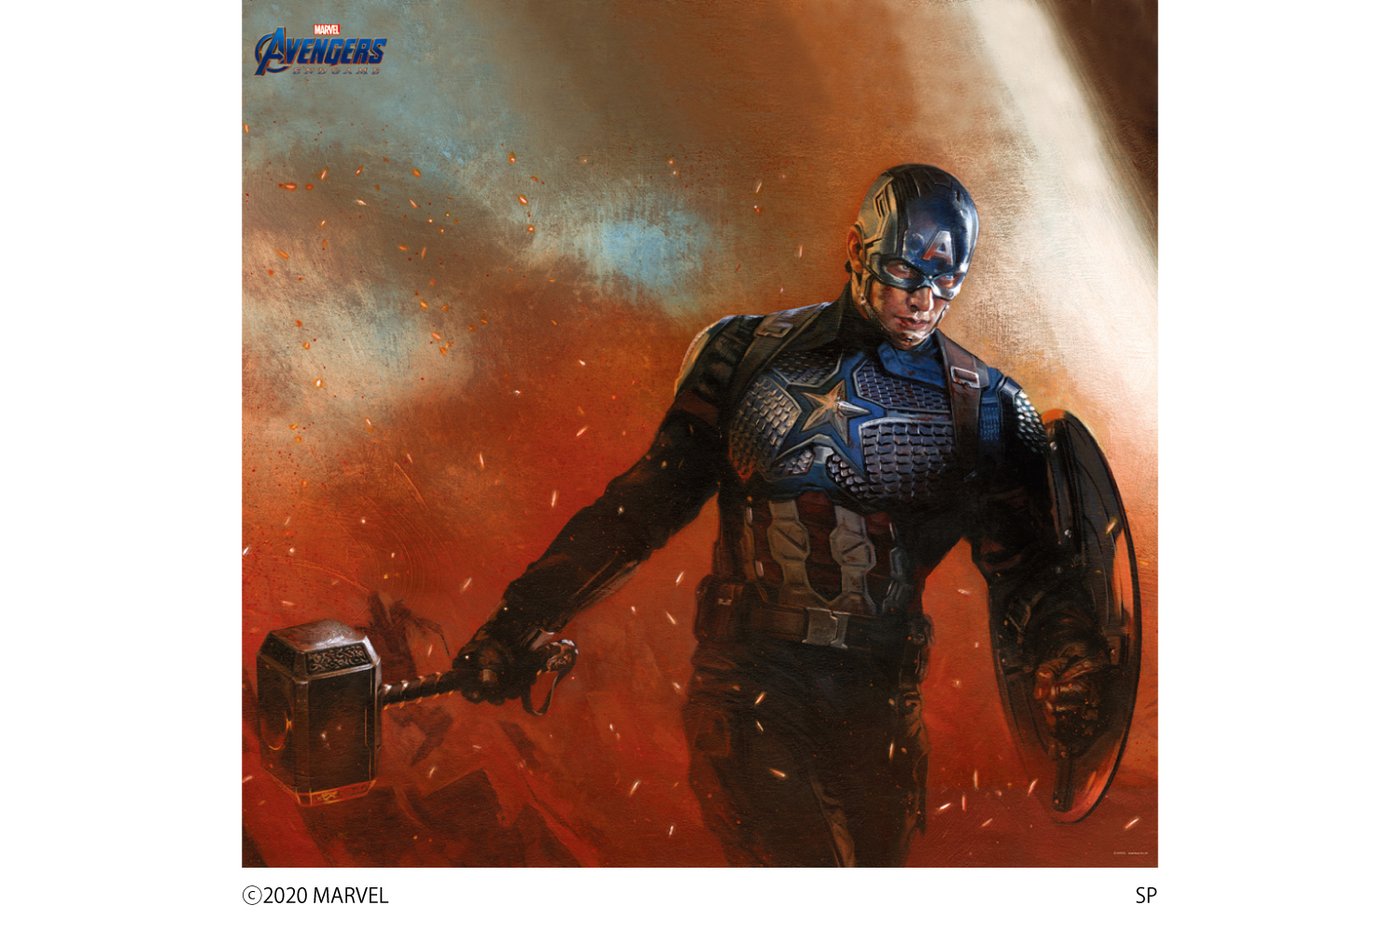 Marvel マーベル Avengers Endgame 壁紙素材ウォールステッカー キャプテン アメリカ 6シートタイプ Wall Paper M035 6 プリテック 再入荷 予約販売